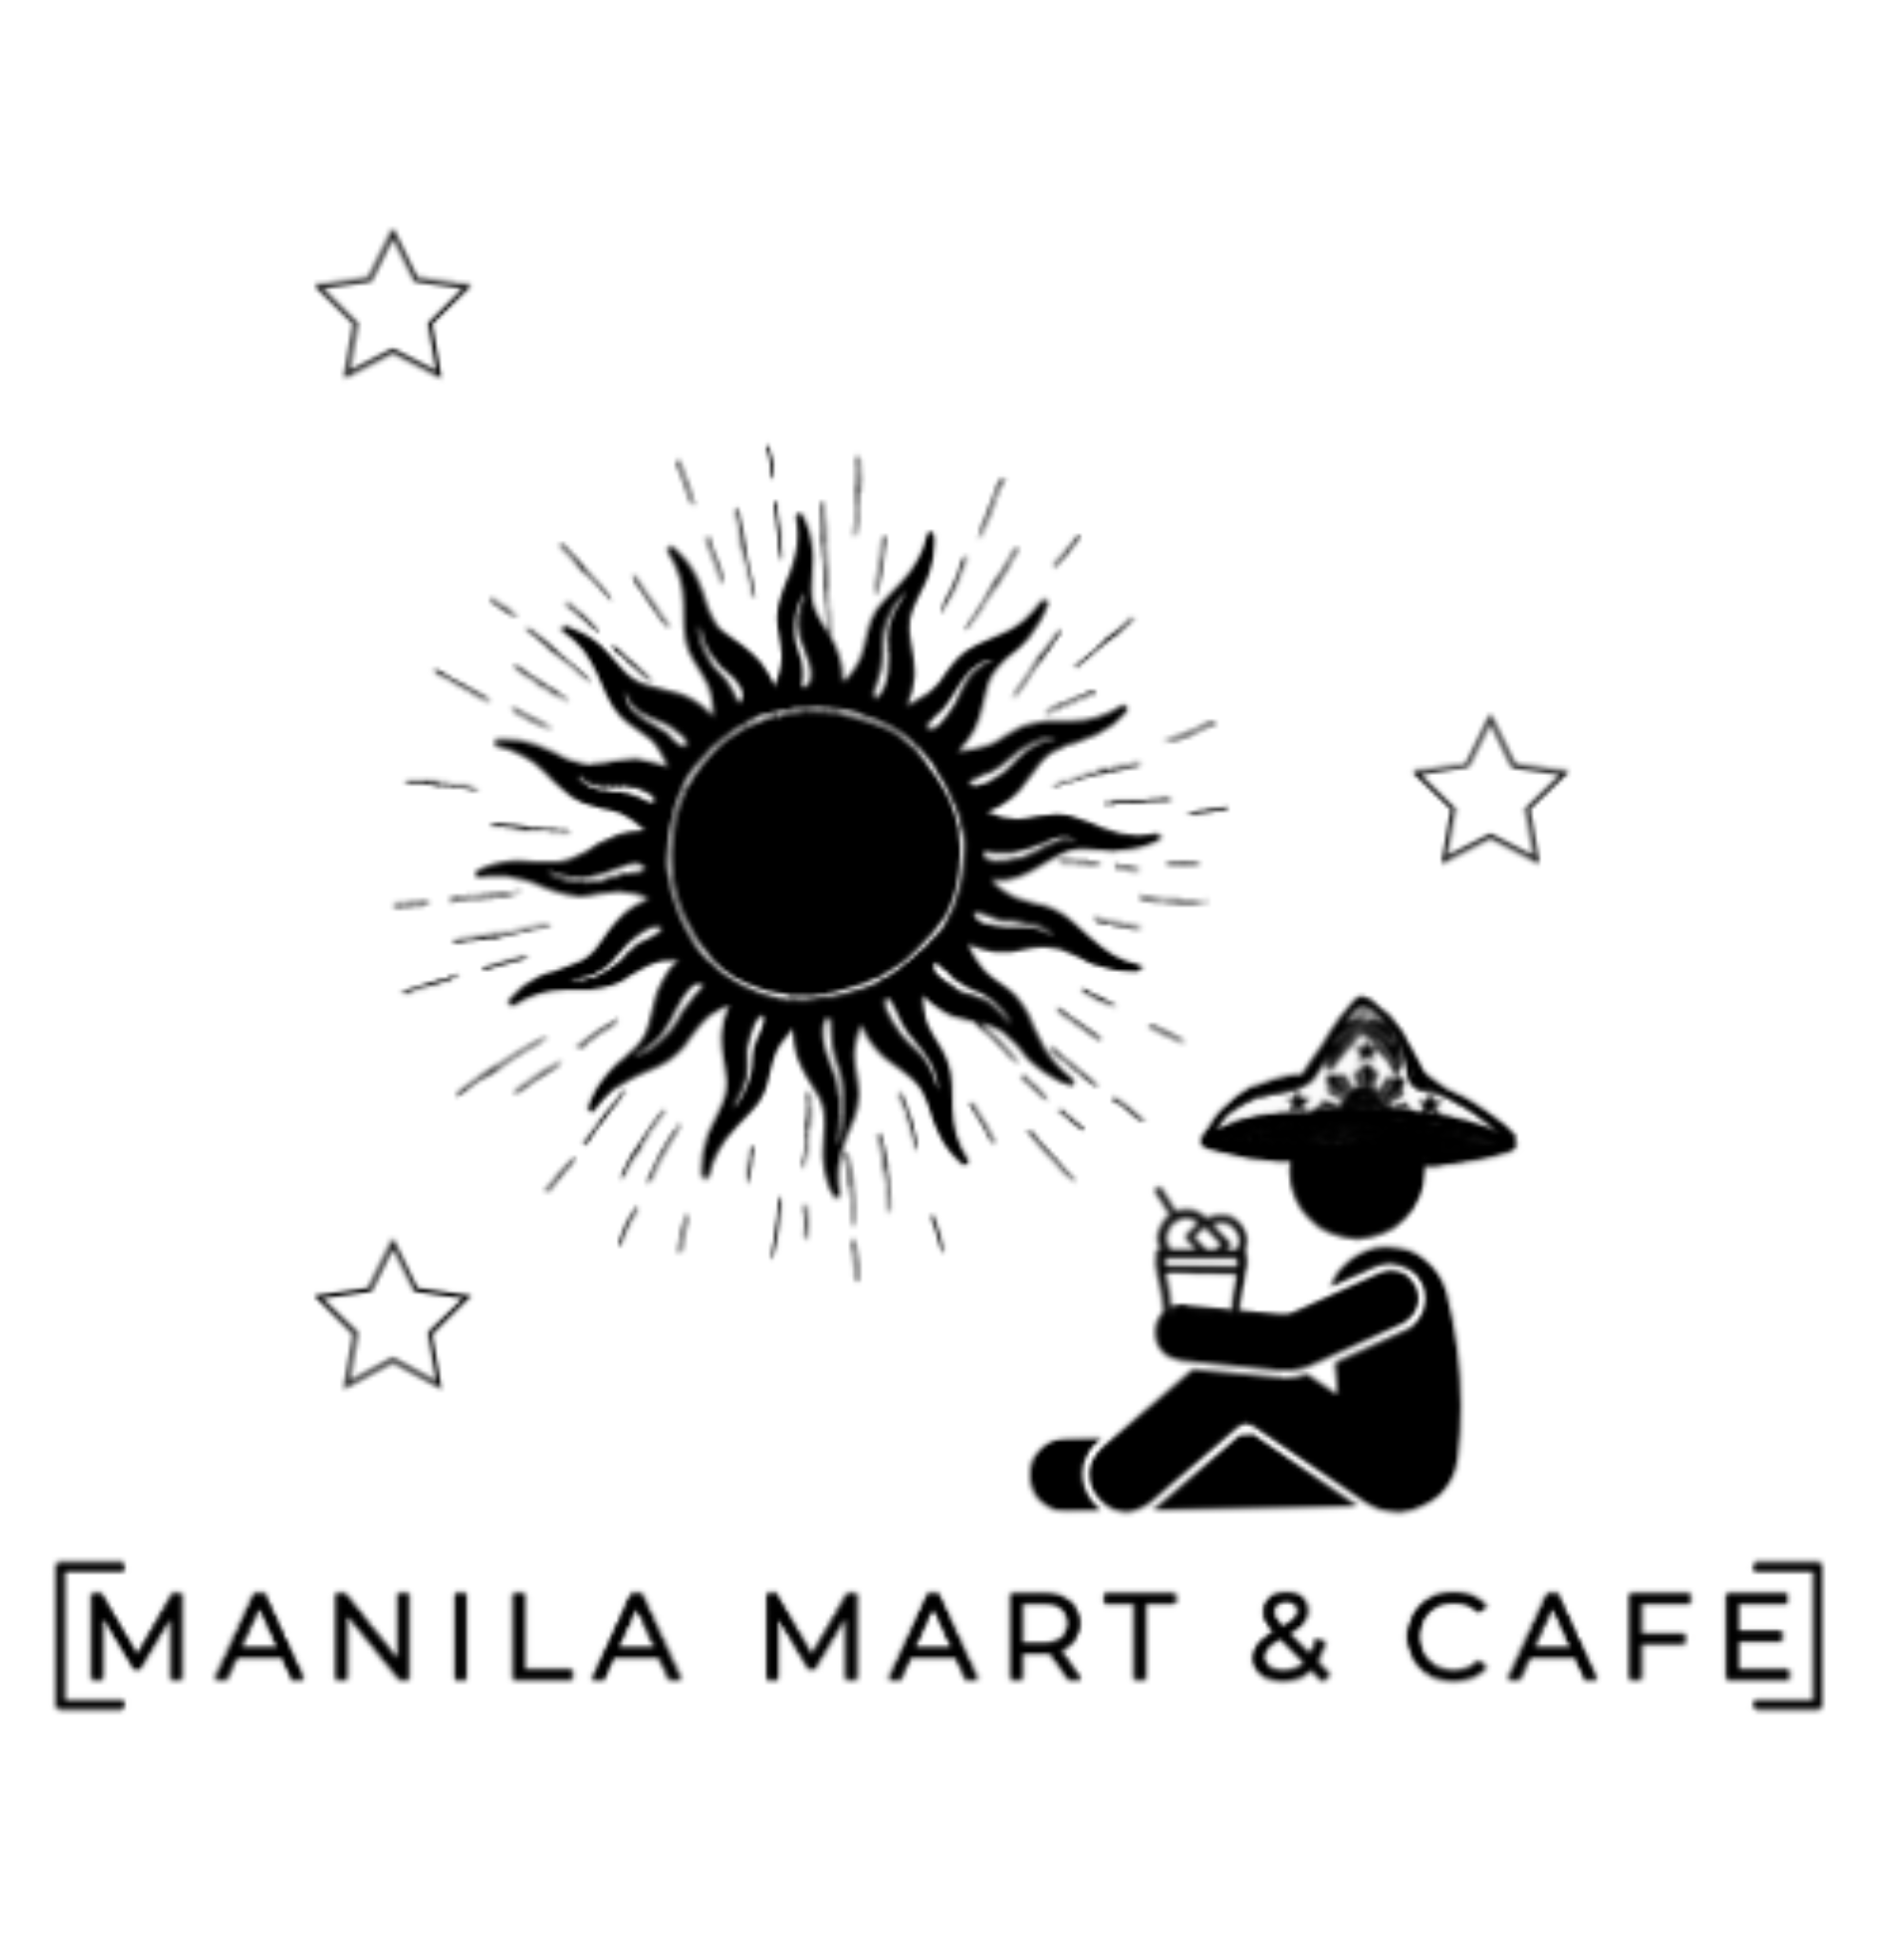 Manila Mart